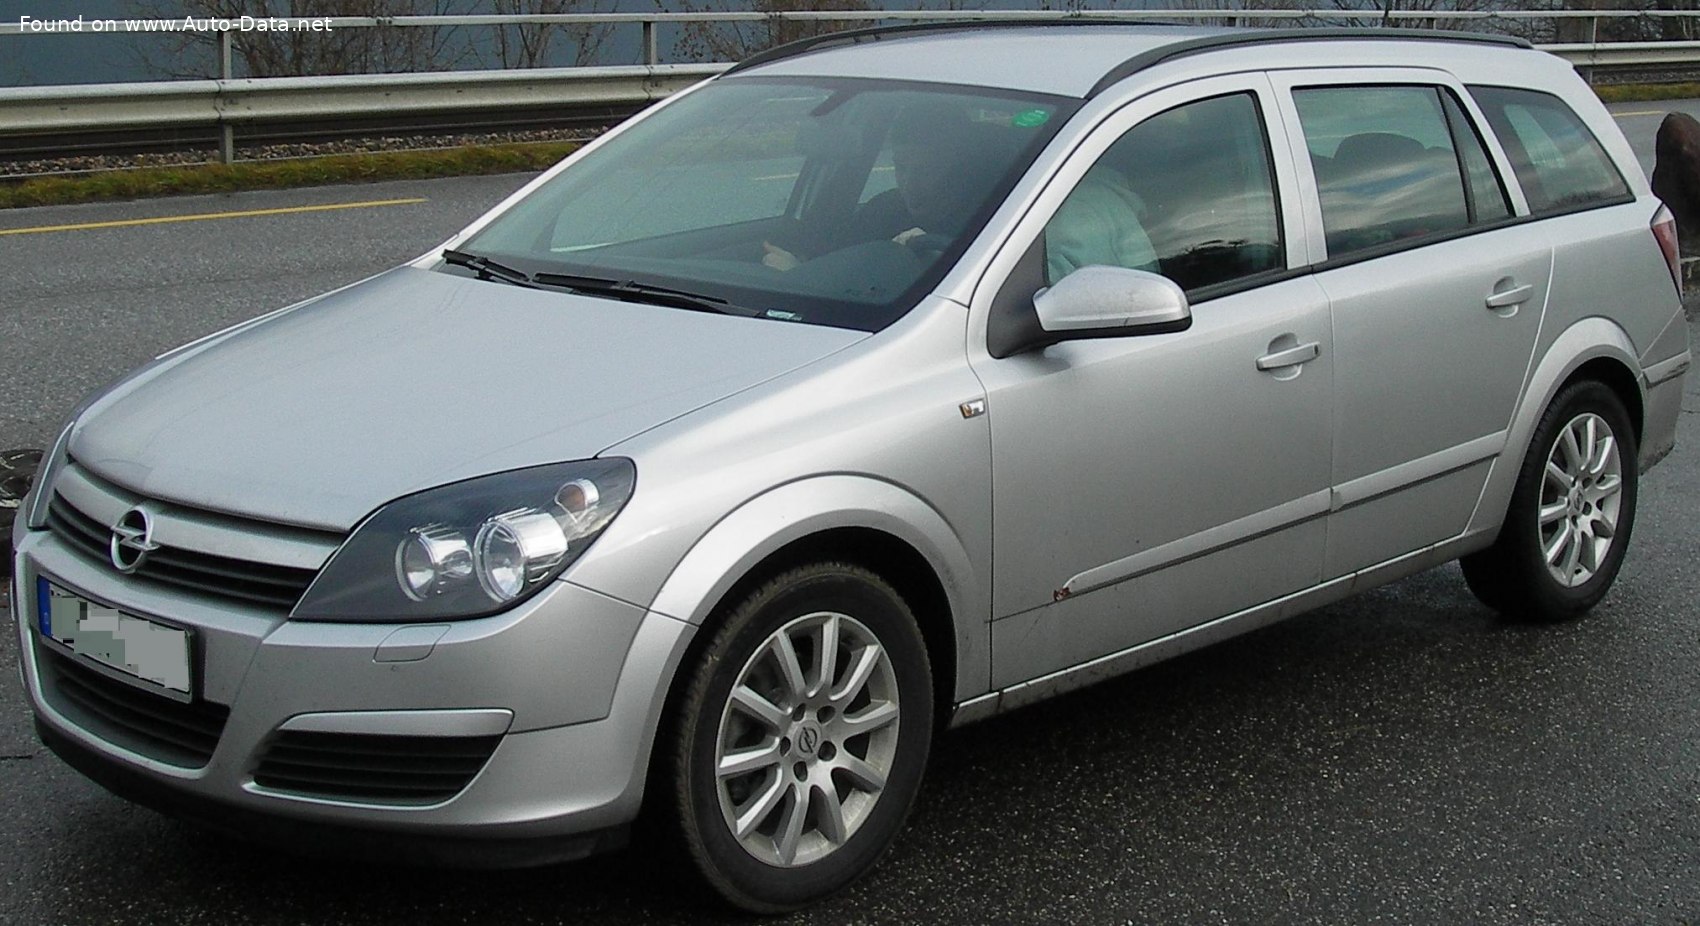 2007 Opel Astra H Sedan  Fiche technique, Consommation de carburant,  Dimensions